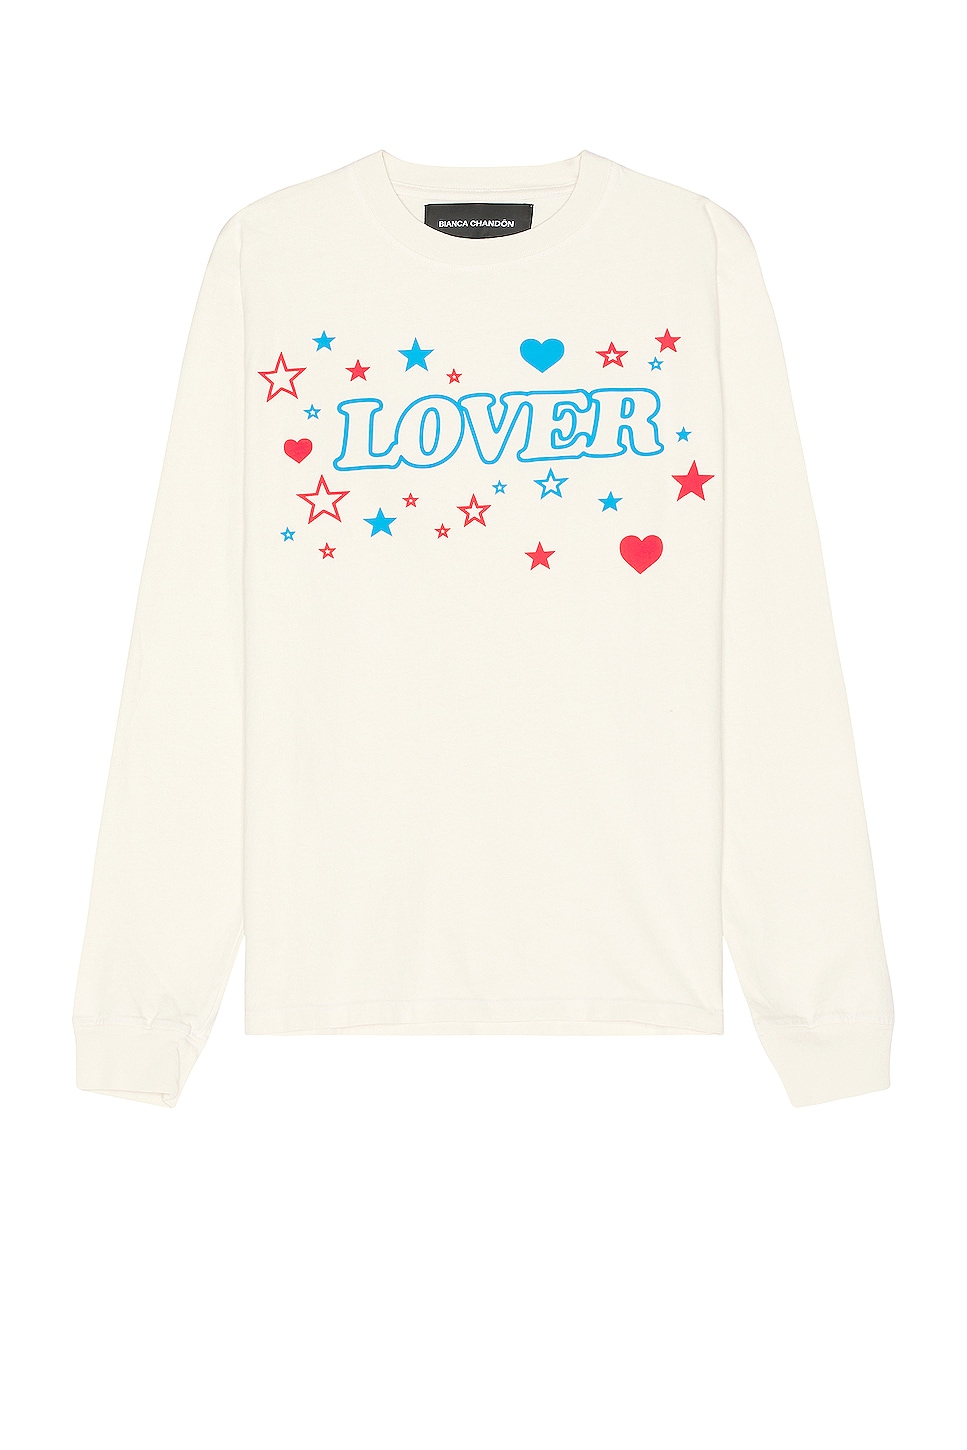 Image 1 of Bianca Chandon Lover Longsleeve T-Shirt in Cream